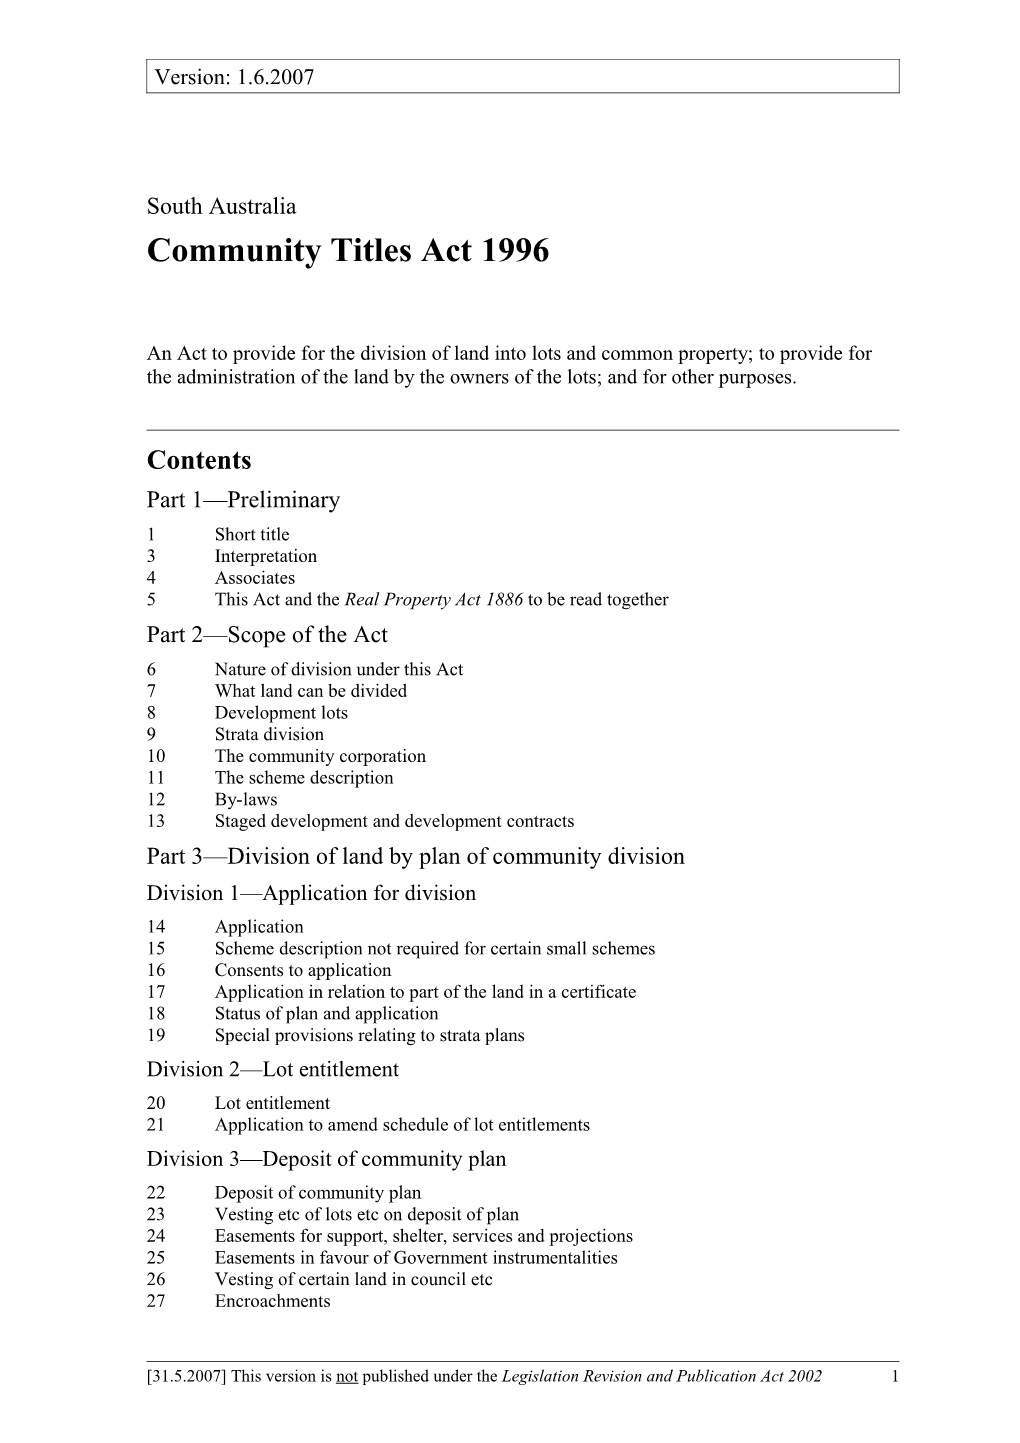 Community Titles Act1996